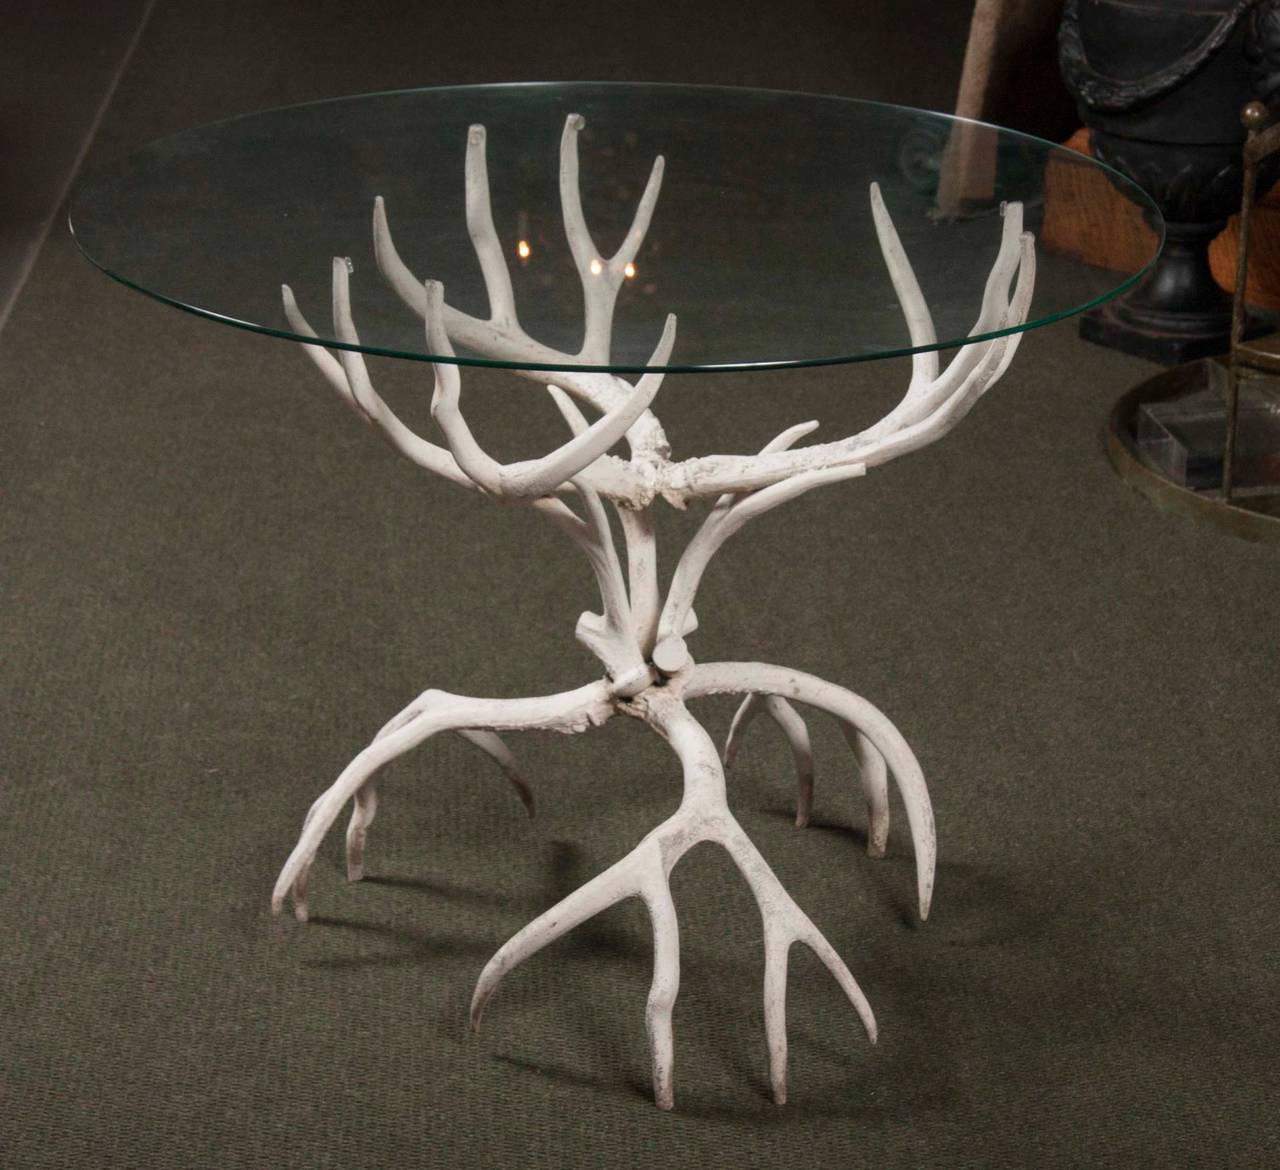 Fabulous Arthur Court signature antler motif lamp; glass top table.
Table dimensions : 27.5